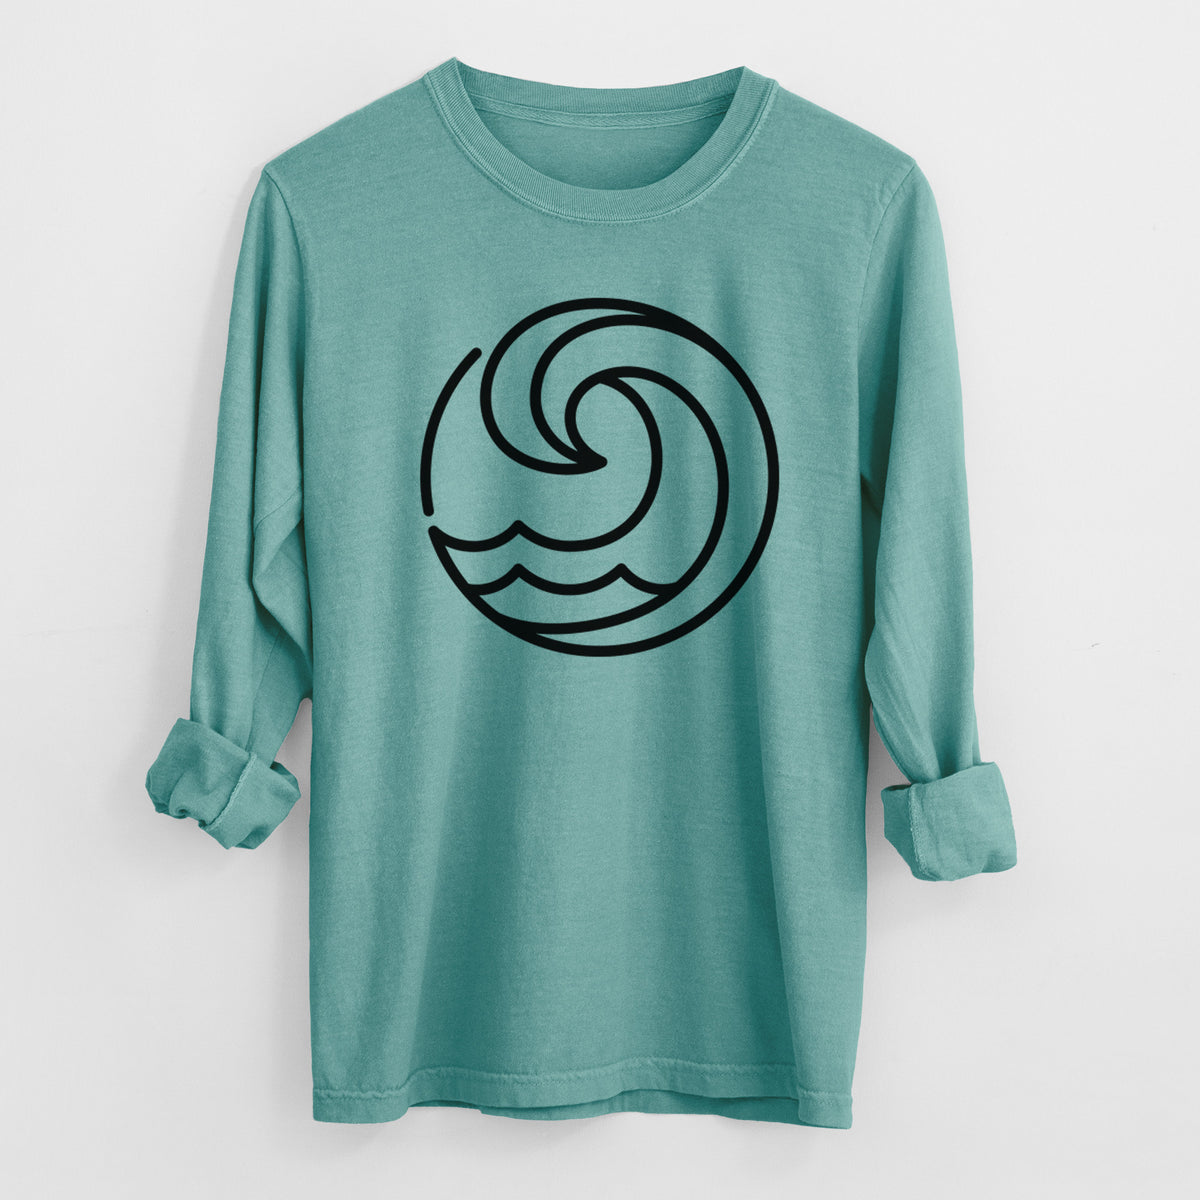 Tidal Wave Circle - Heavyweight 100% Cotton Long Sleeve